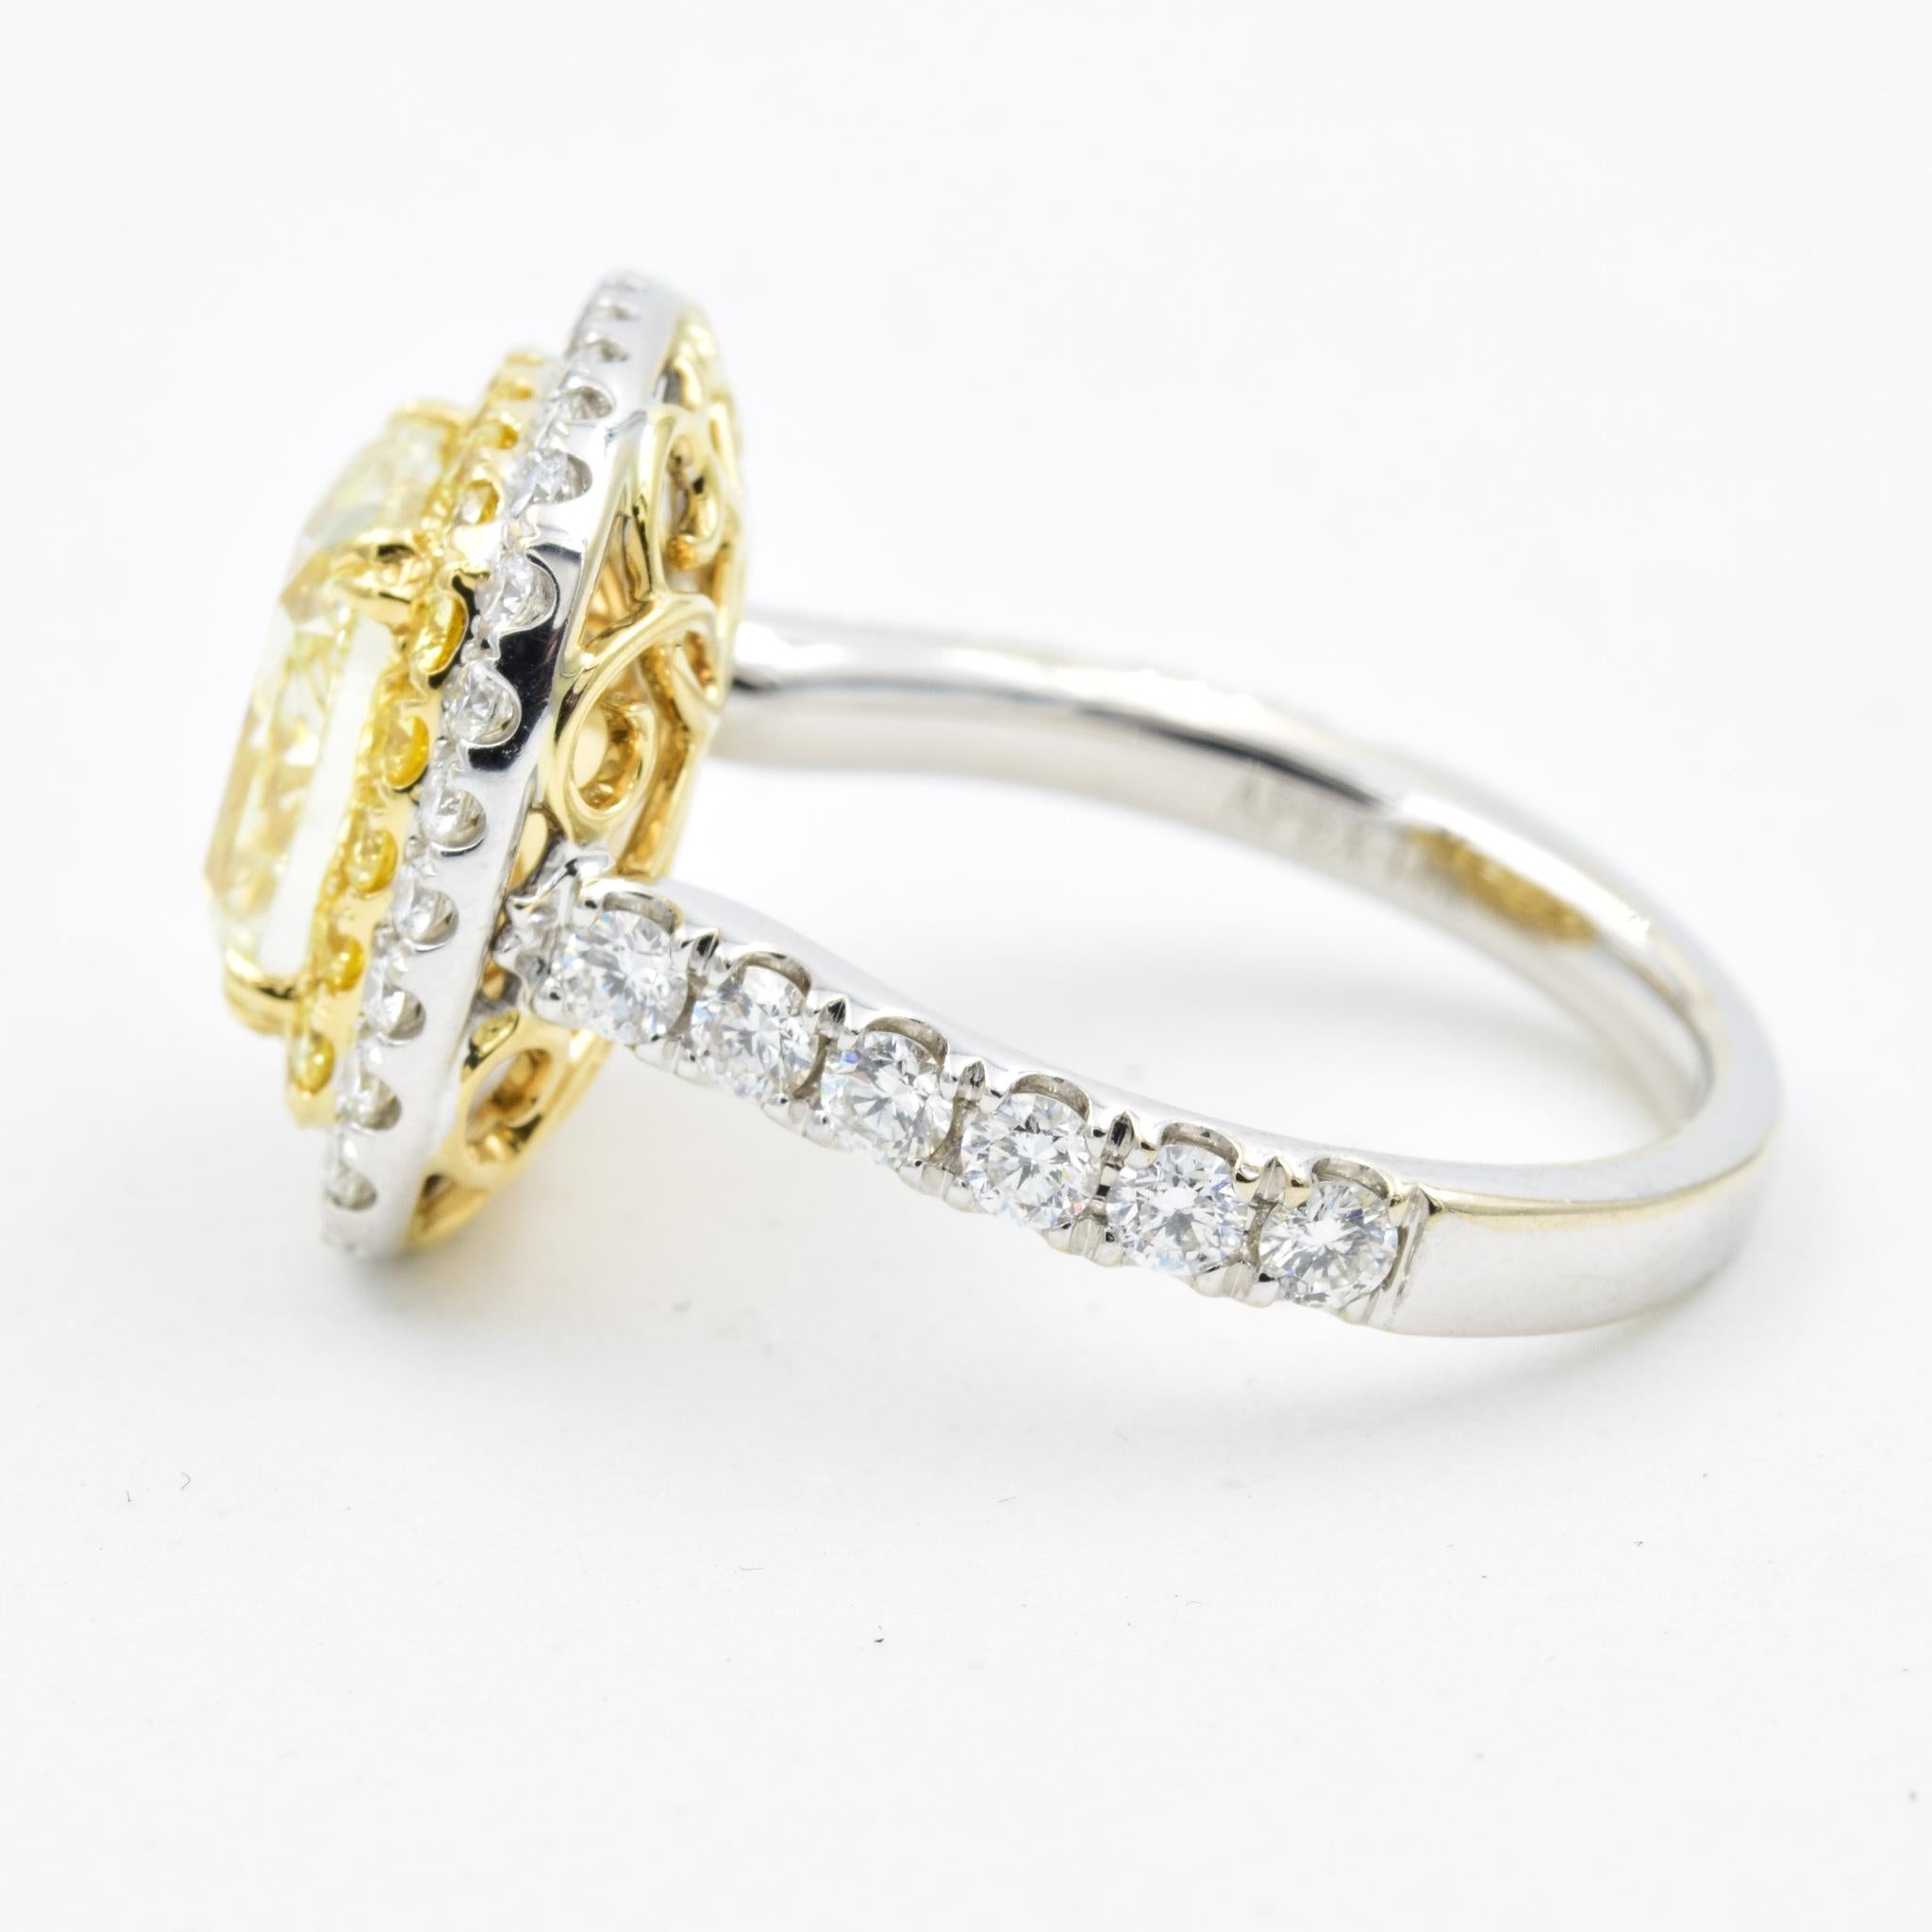 Cushion Cut 4.01 Carat GIA Certified Fancy Yellow Diamond Engagement Ring with 5.26 Carat